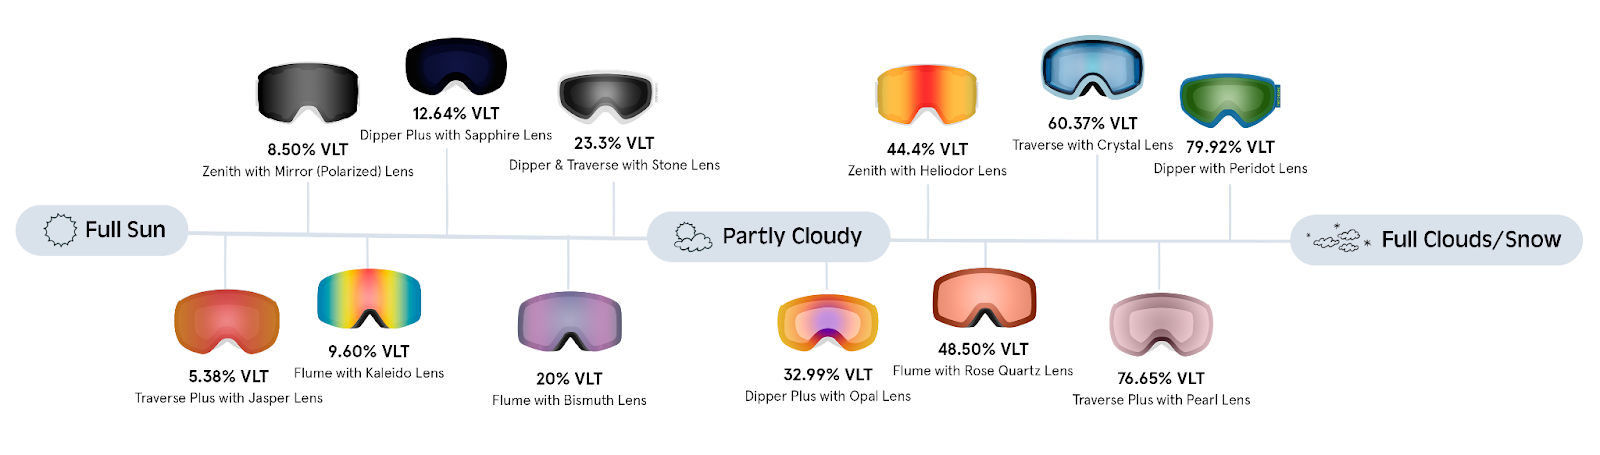 Infographic comparing VLT ratings of various Retrospec snow goggle lenses